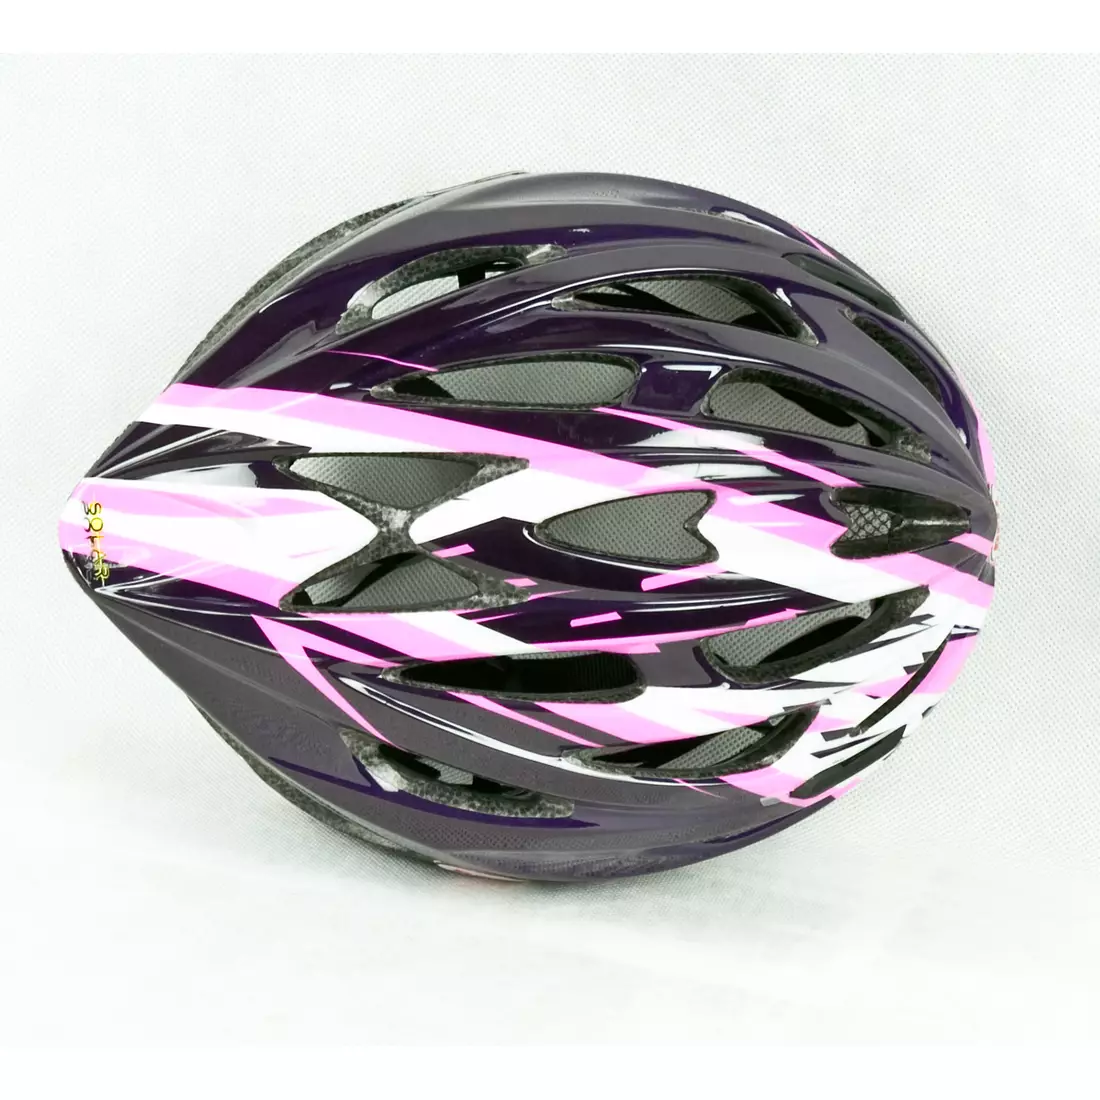 BELL SOLAR - dámska cyklistická prilba, fialová a ružová